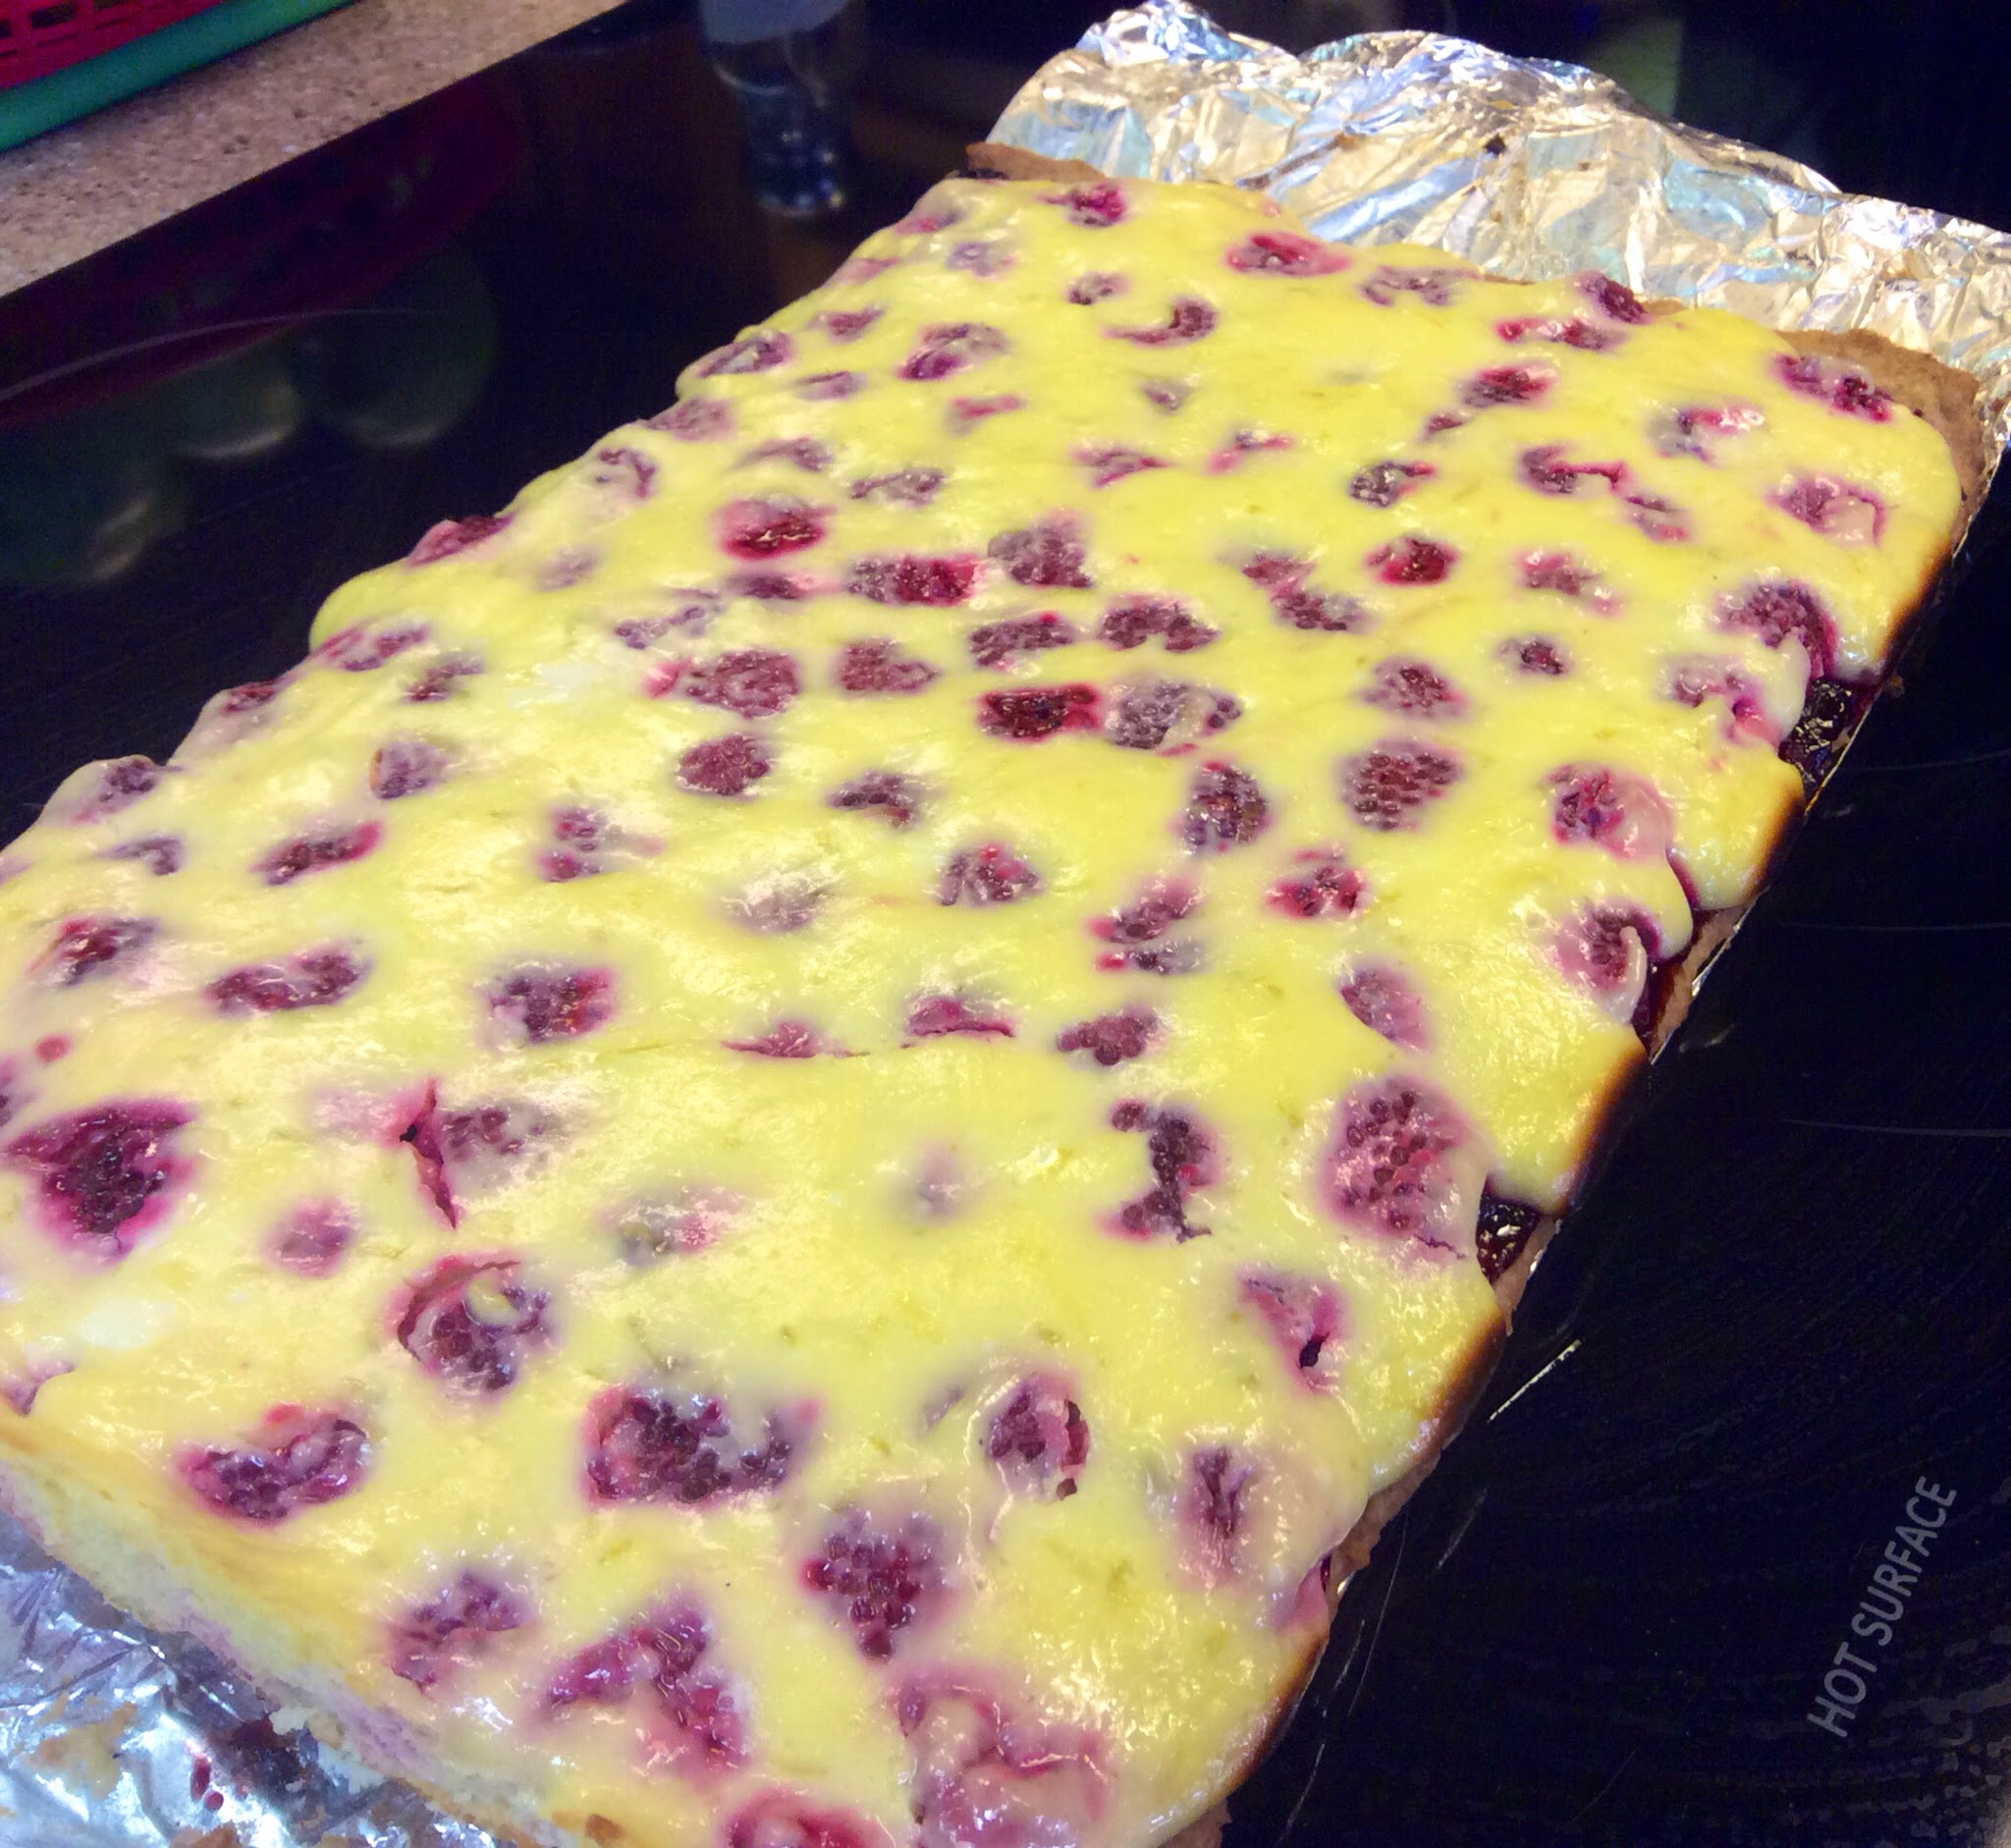 Over at Julie's: Fresh Raspberry Cheesecake Bites